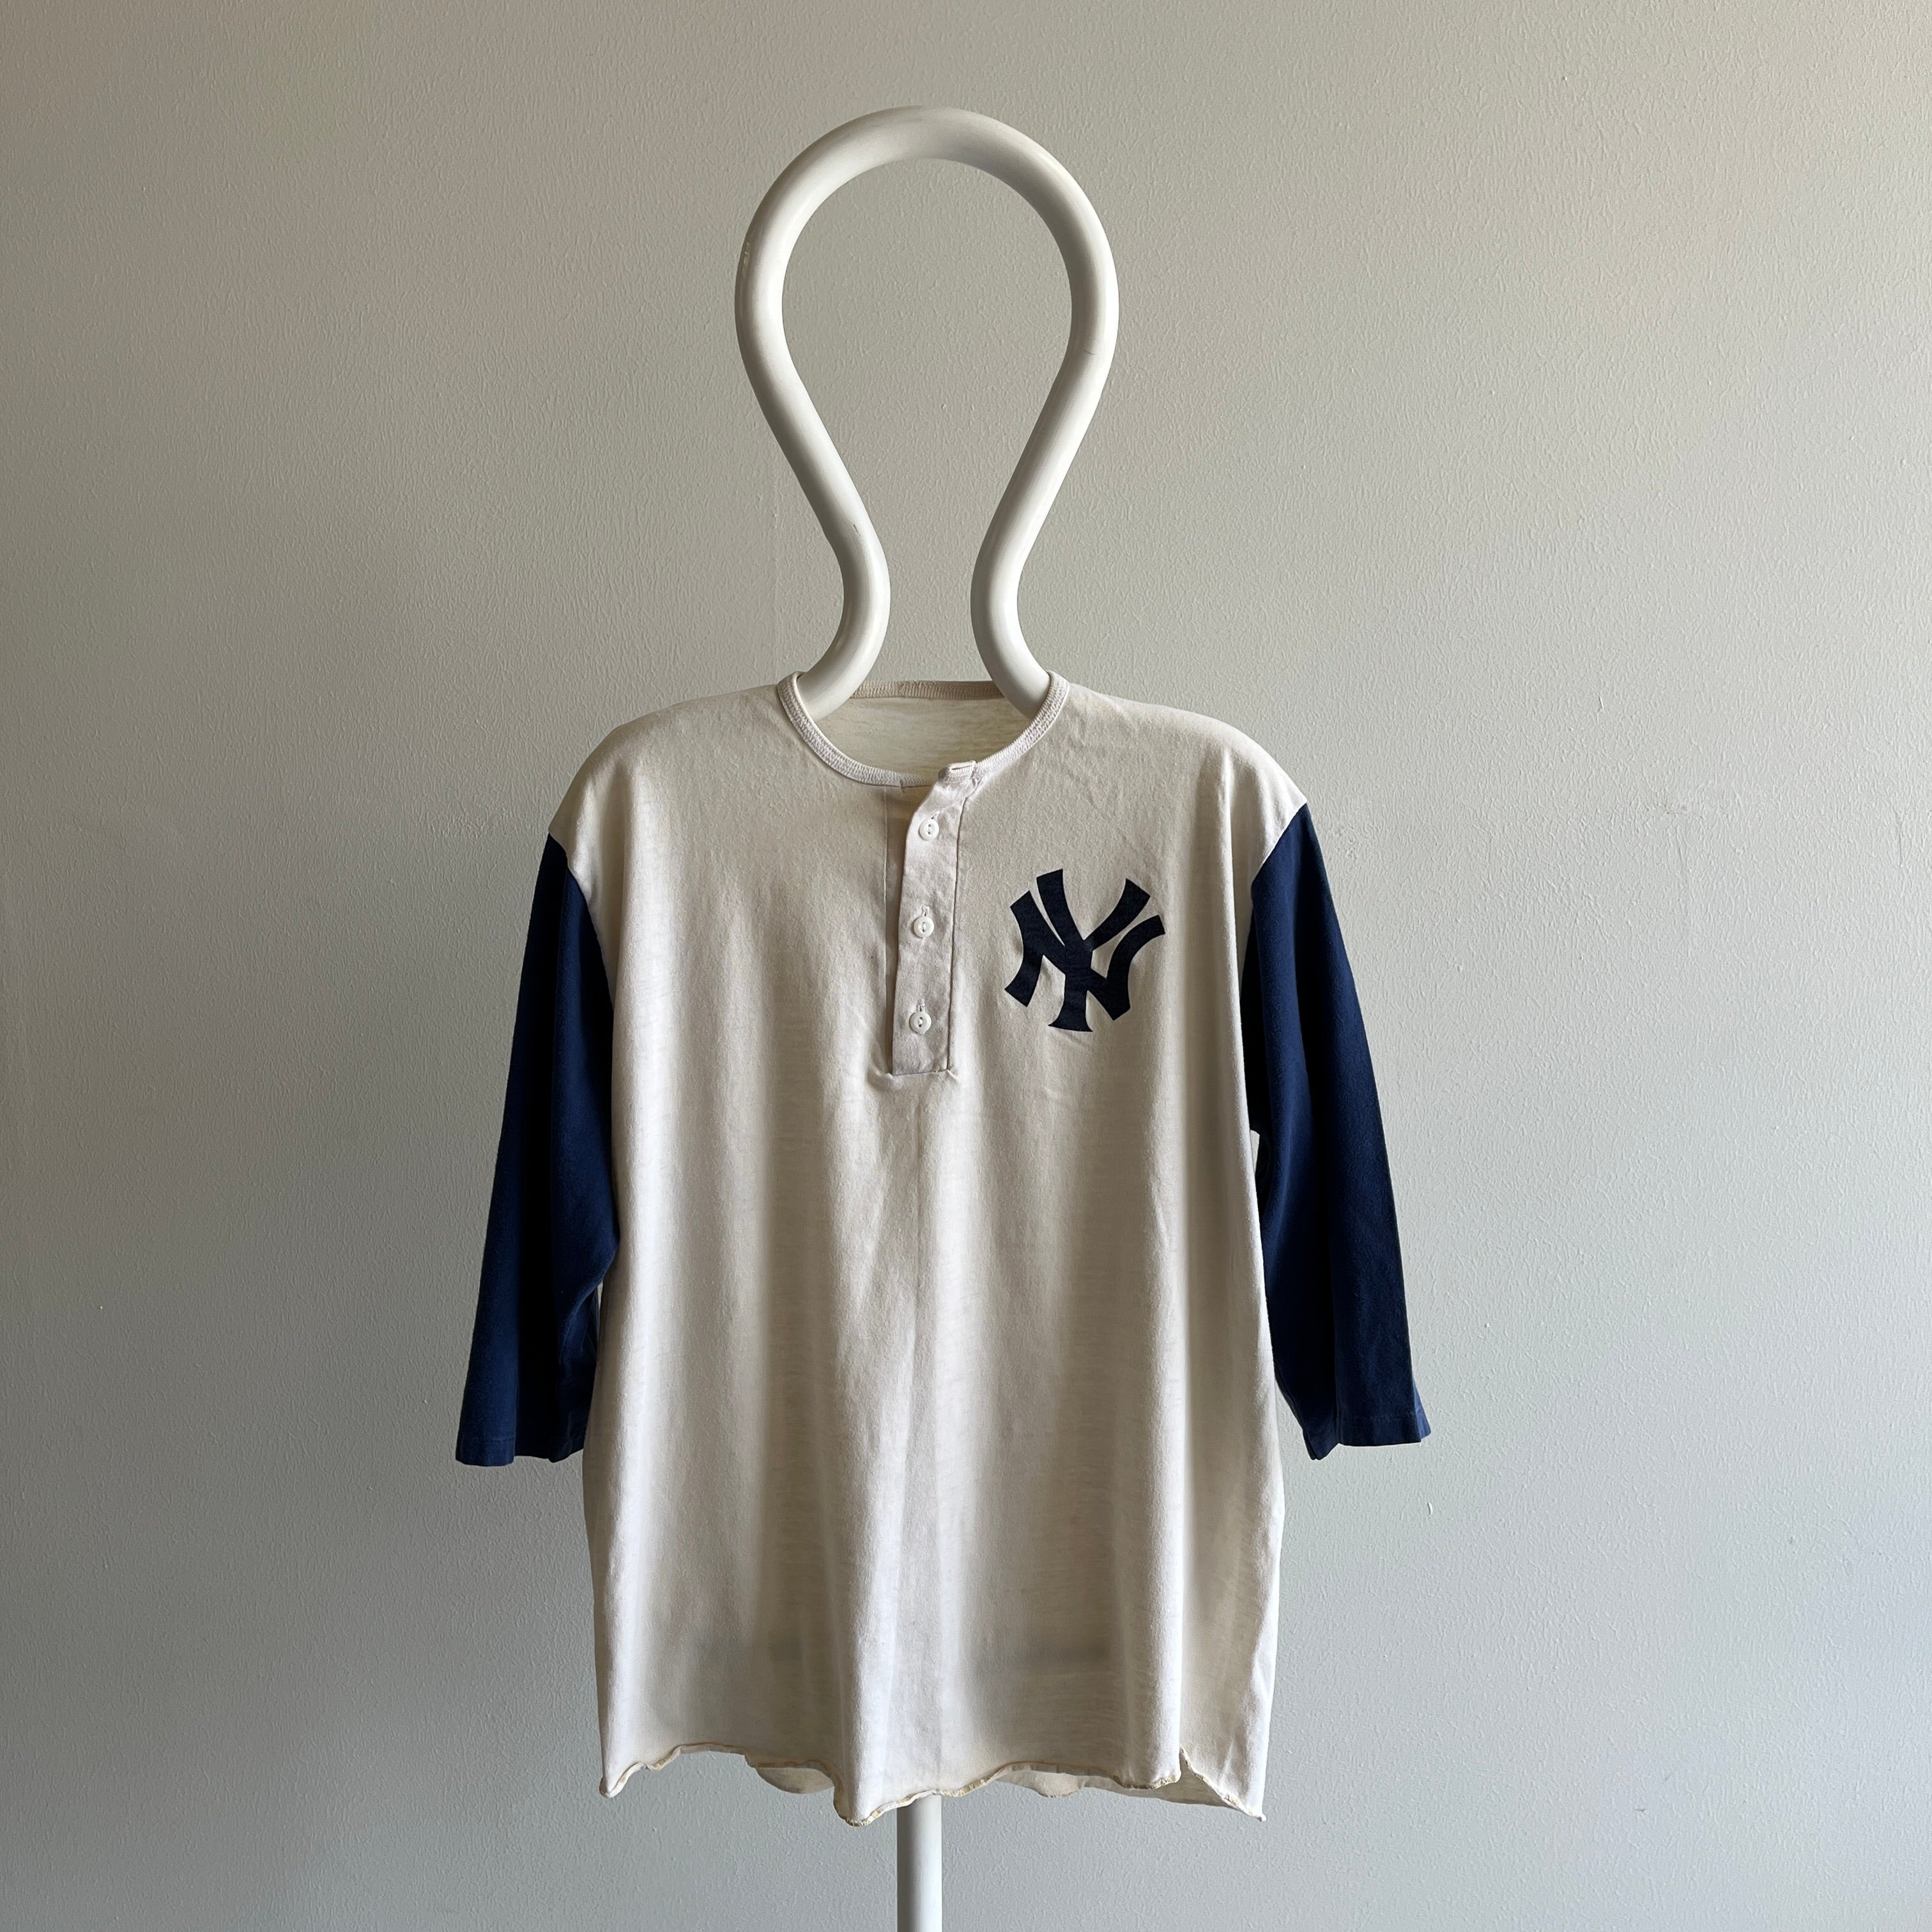  New York Yankees Shirt